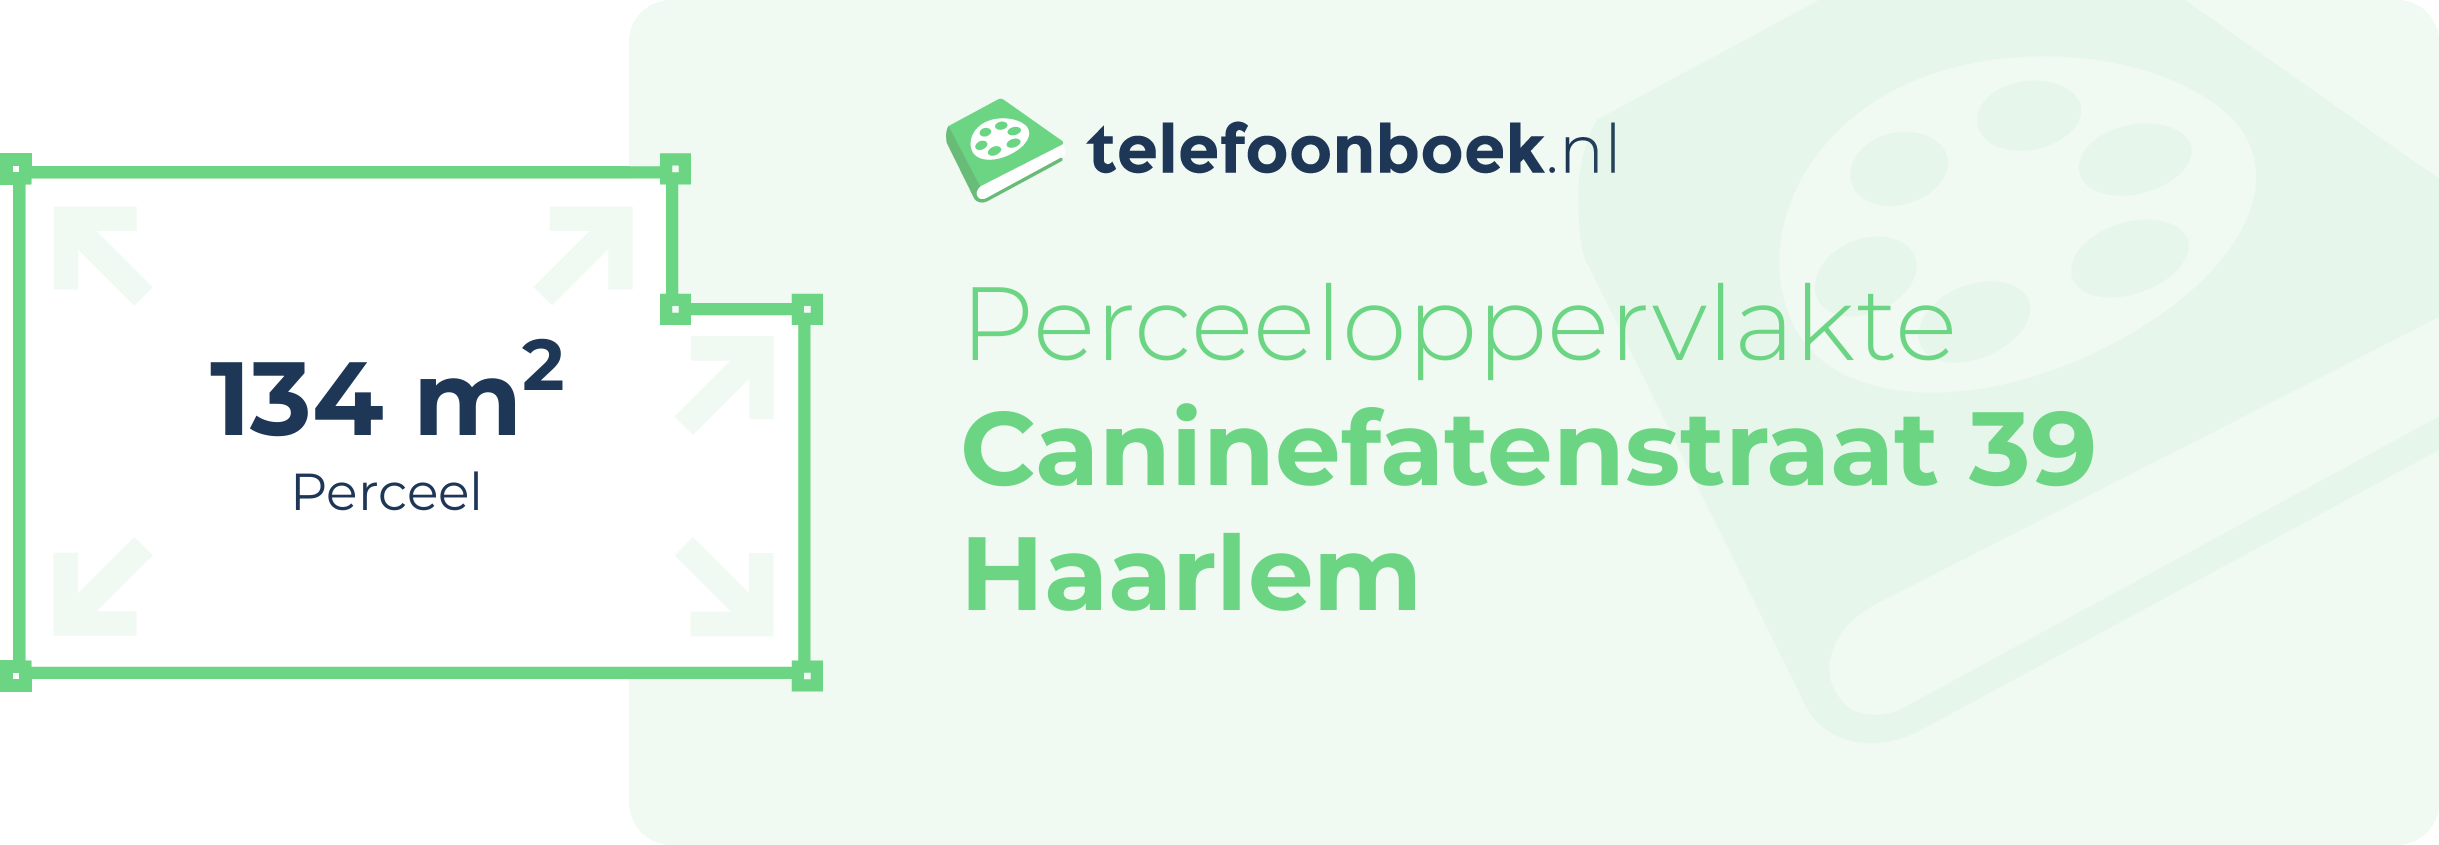 Perceeloppervlakte Caninefatenstraat 39 Haarlem